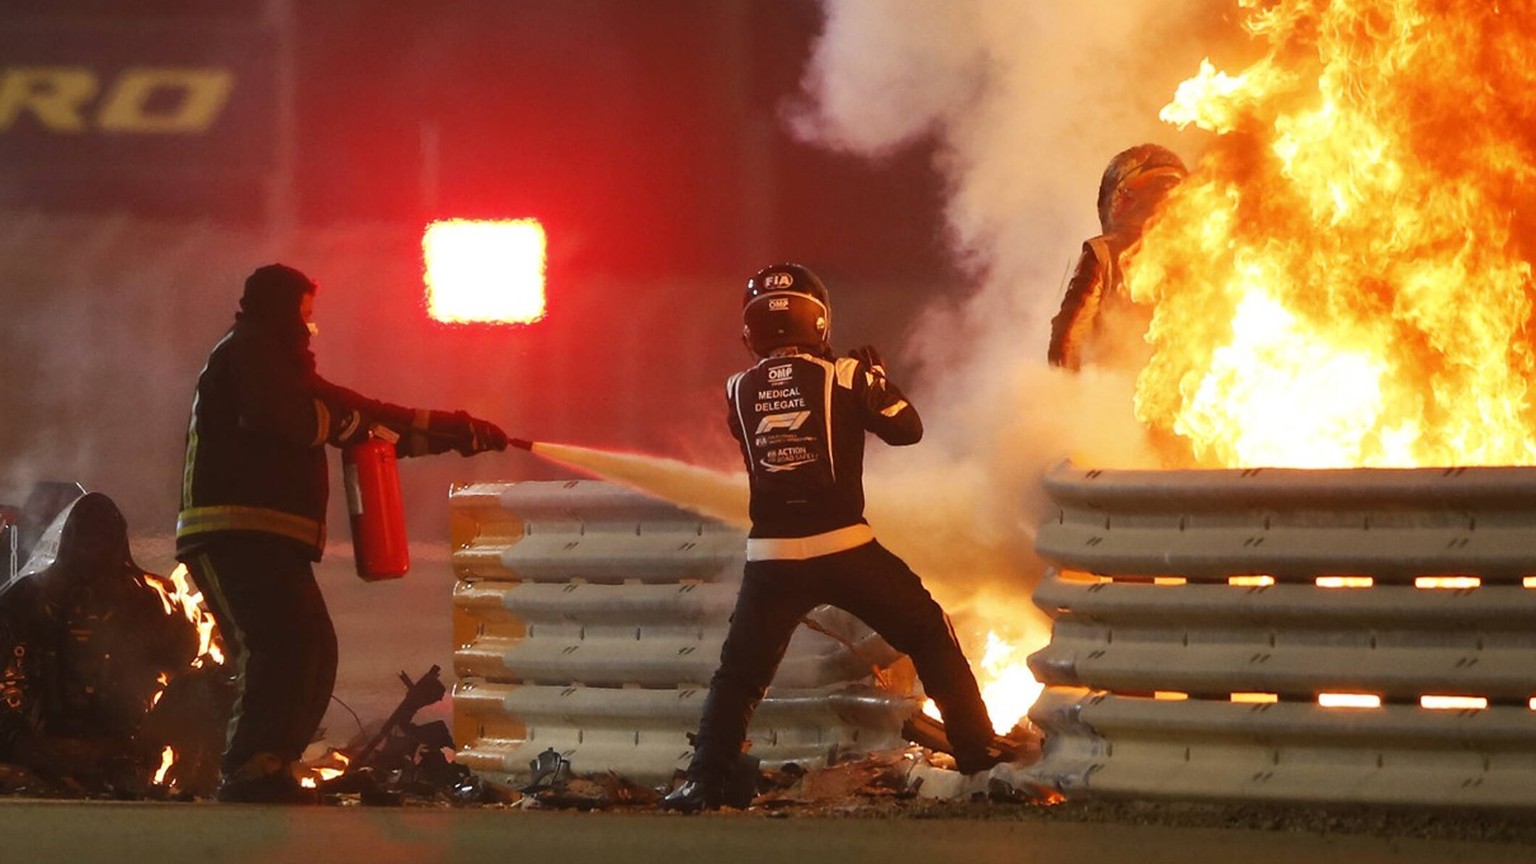 Bilder des Jahres 2020, Sport 11 November Sport Themen der Woche KW48 2020 Bahrain GP BAHRAIN INTERNATIONAL CIRCUIT, BAHRAIN - NOVEMBER 29: Romain Grosjean, Haas F1, emerges from flames after a horrif ...